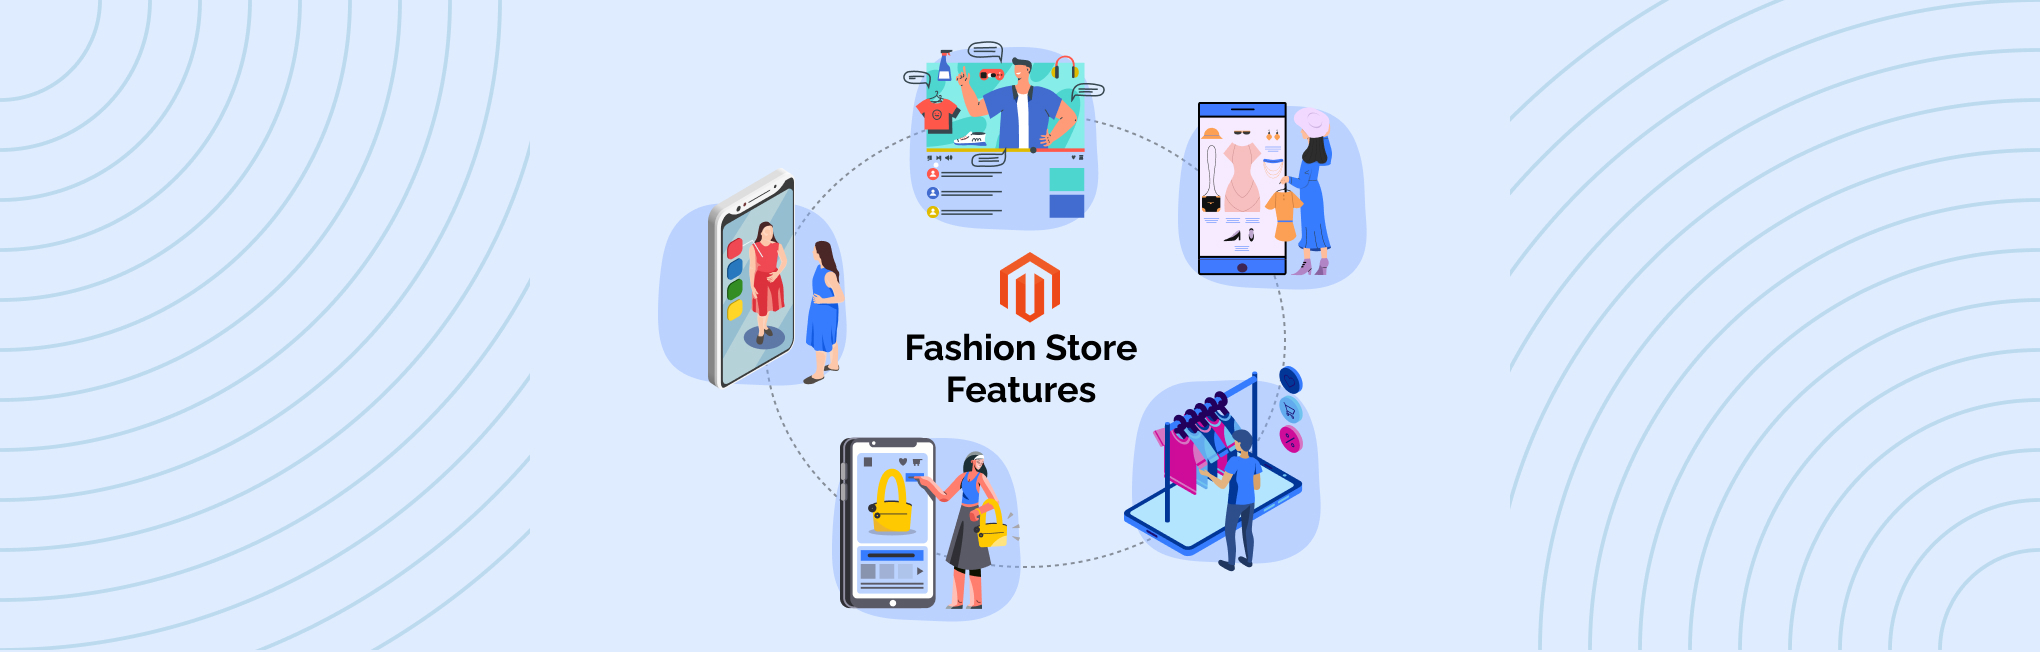 13 Magento Fashion Store Features to Maximize Revenue